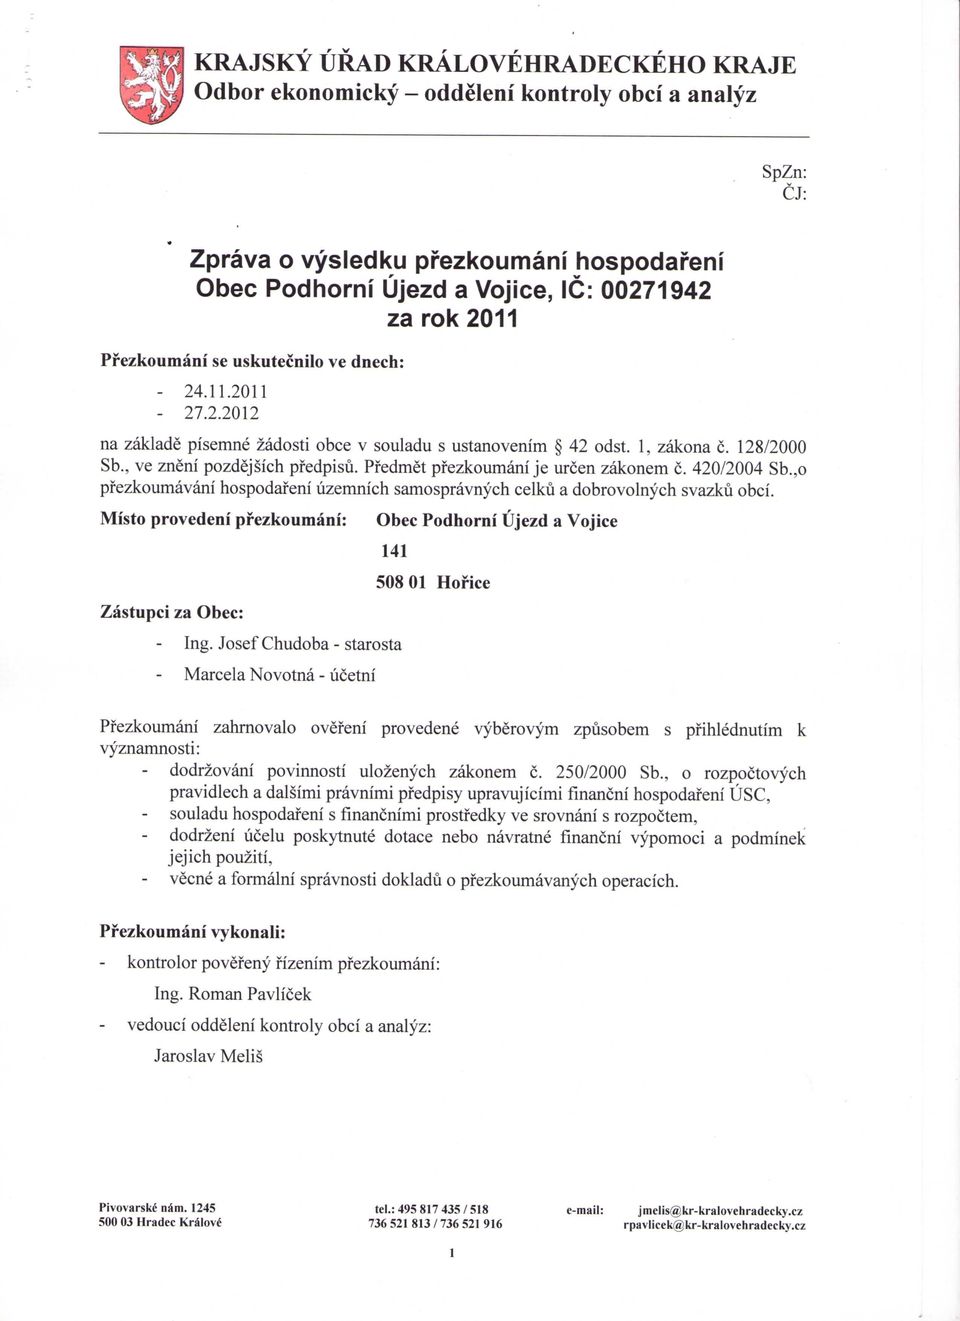 Pfedmet pfezkoumani je urcen zakonem c. 420/2004 Sb.,o pfezkoumavani hospodafeni uzemnich samospravnych celku a dobrovolnych svazku obci.